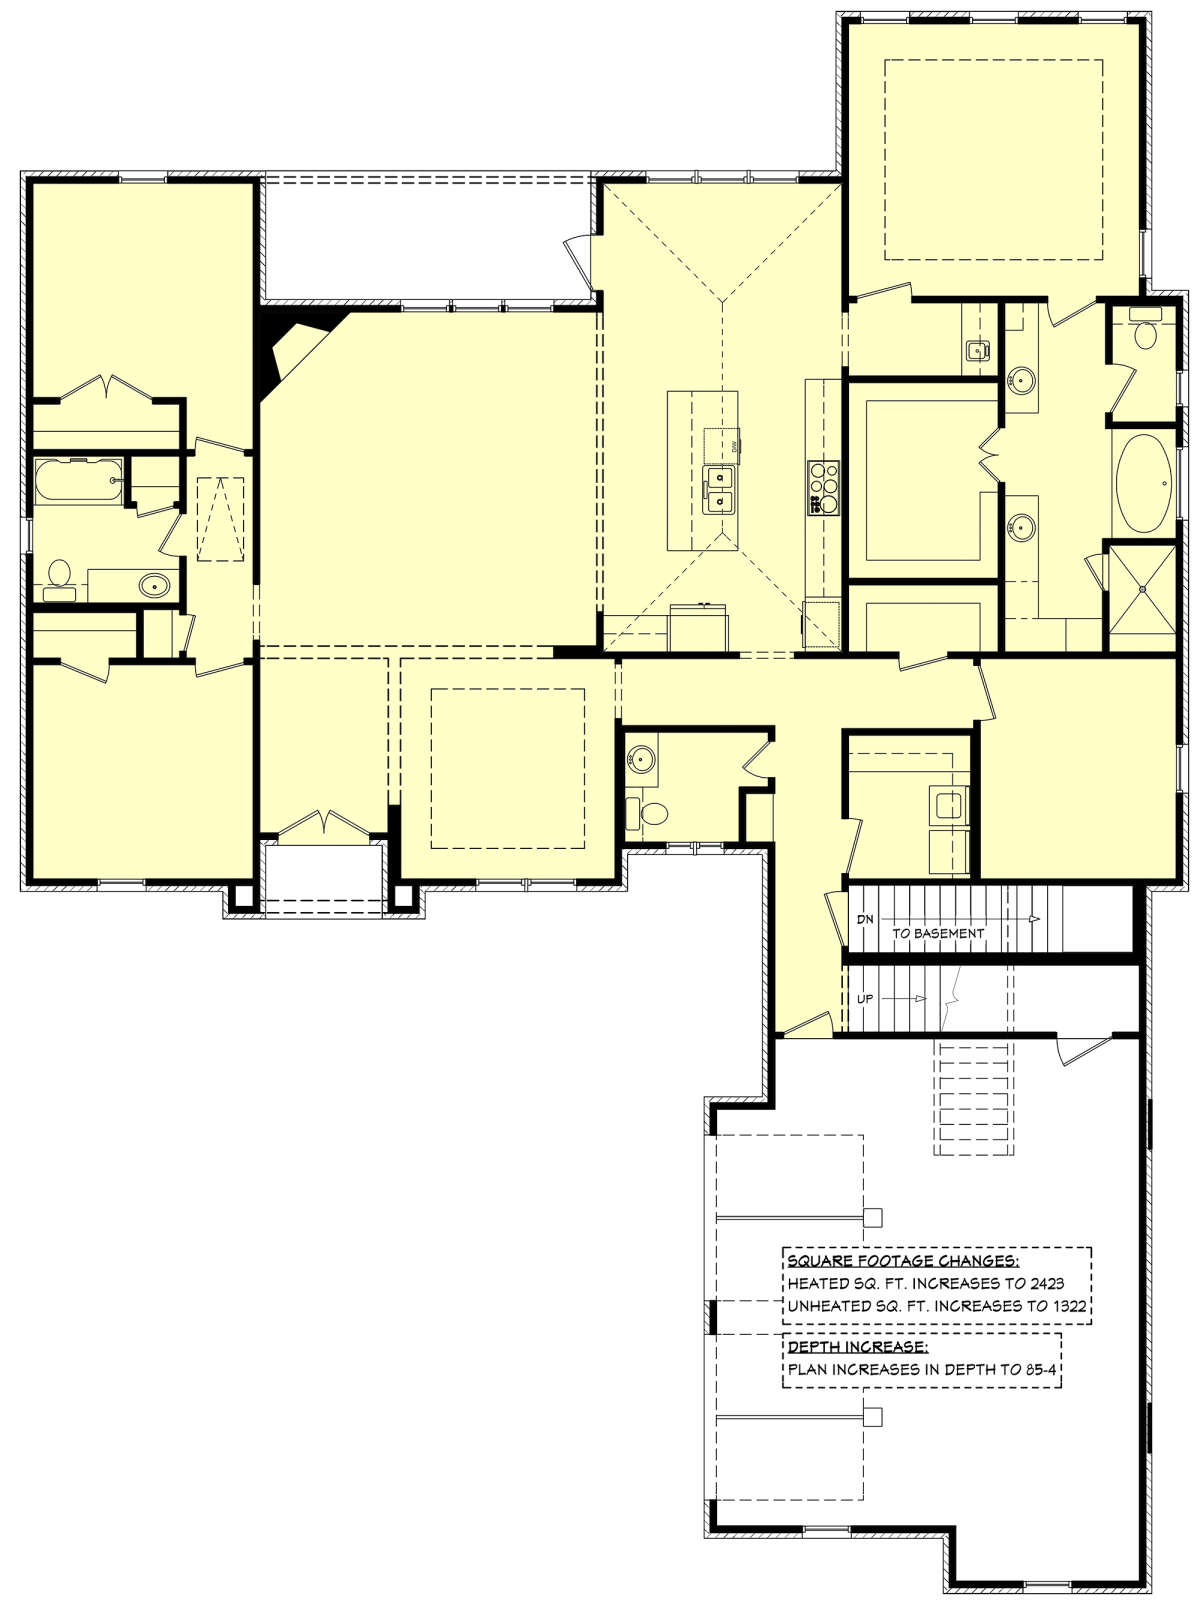 European Plan: 2,405 Square Feet, 3 Bedrooms, 2.5 Bathrooms - 041-00136